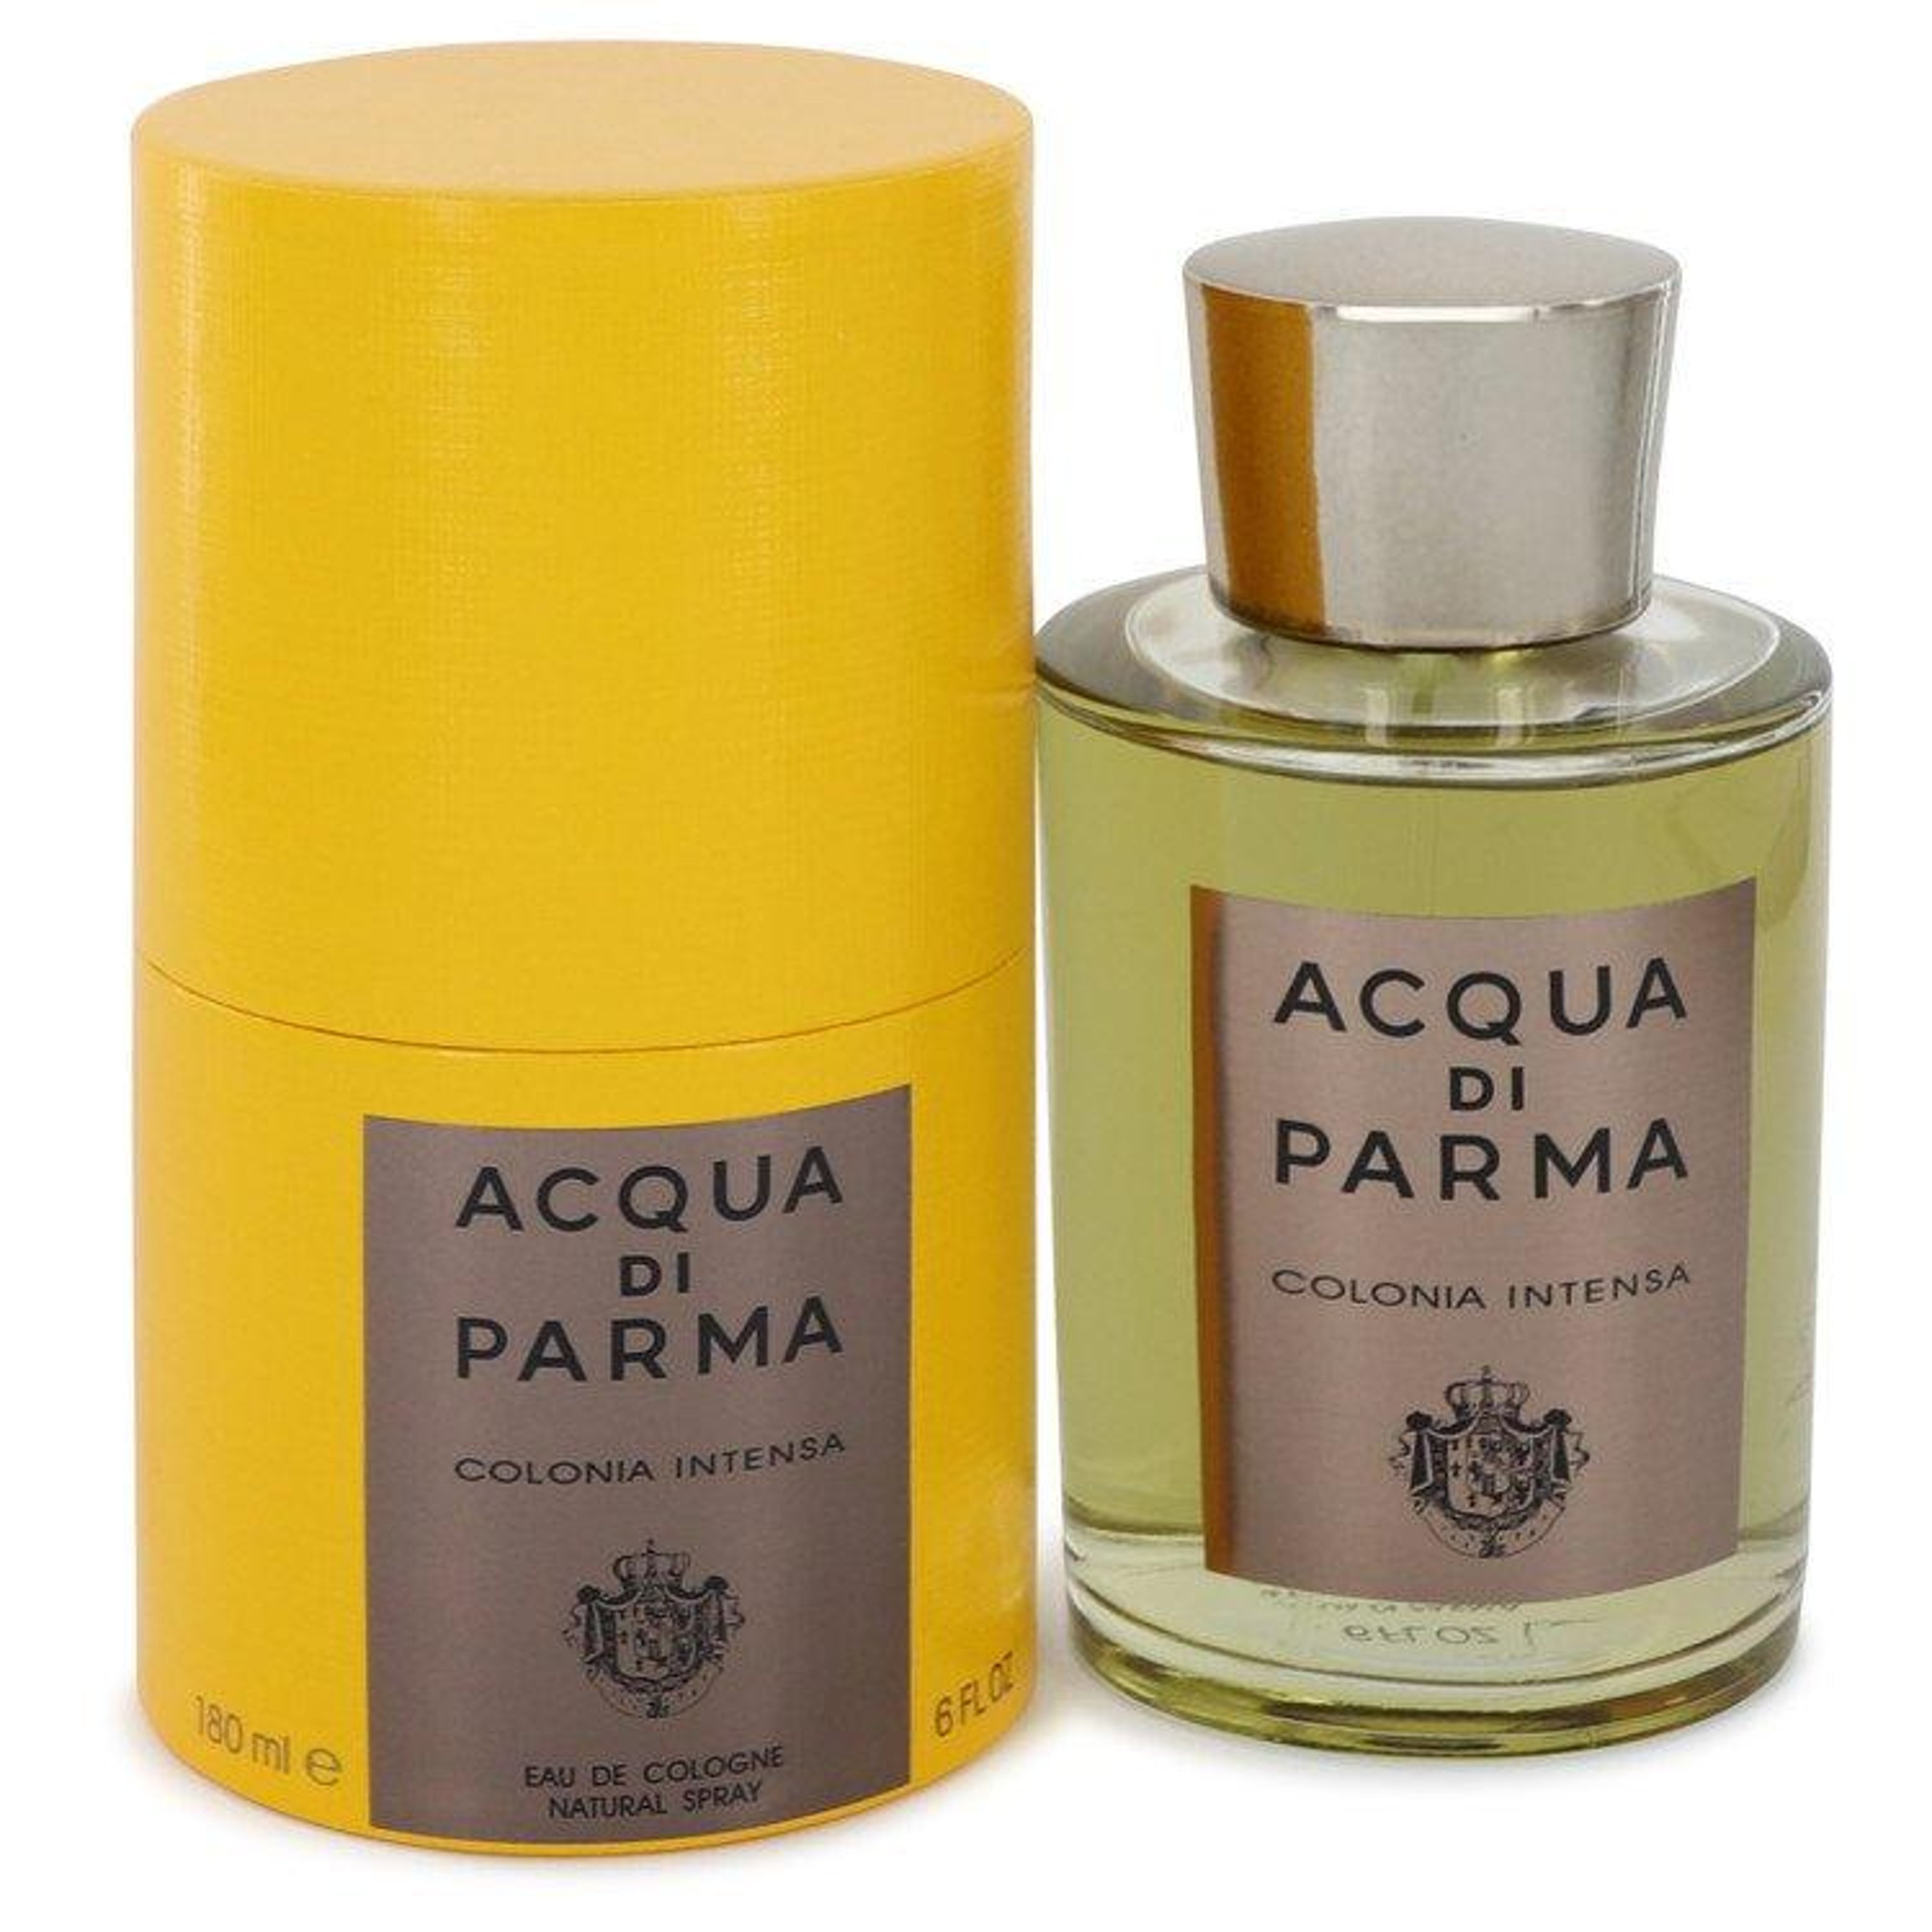 Royall Fragrances Acqua Di Parma Acqua Di Parma Colonia Intensa By Acqua Di Parma Eau De Cologne Spray 6 oz